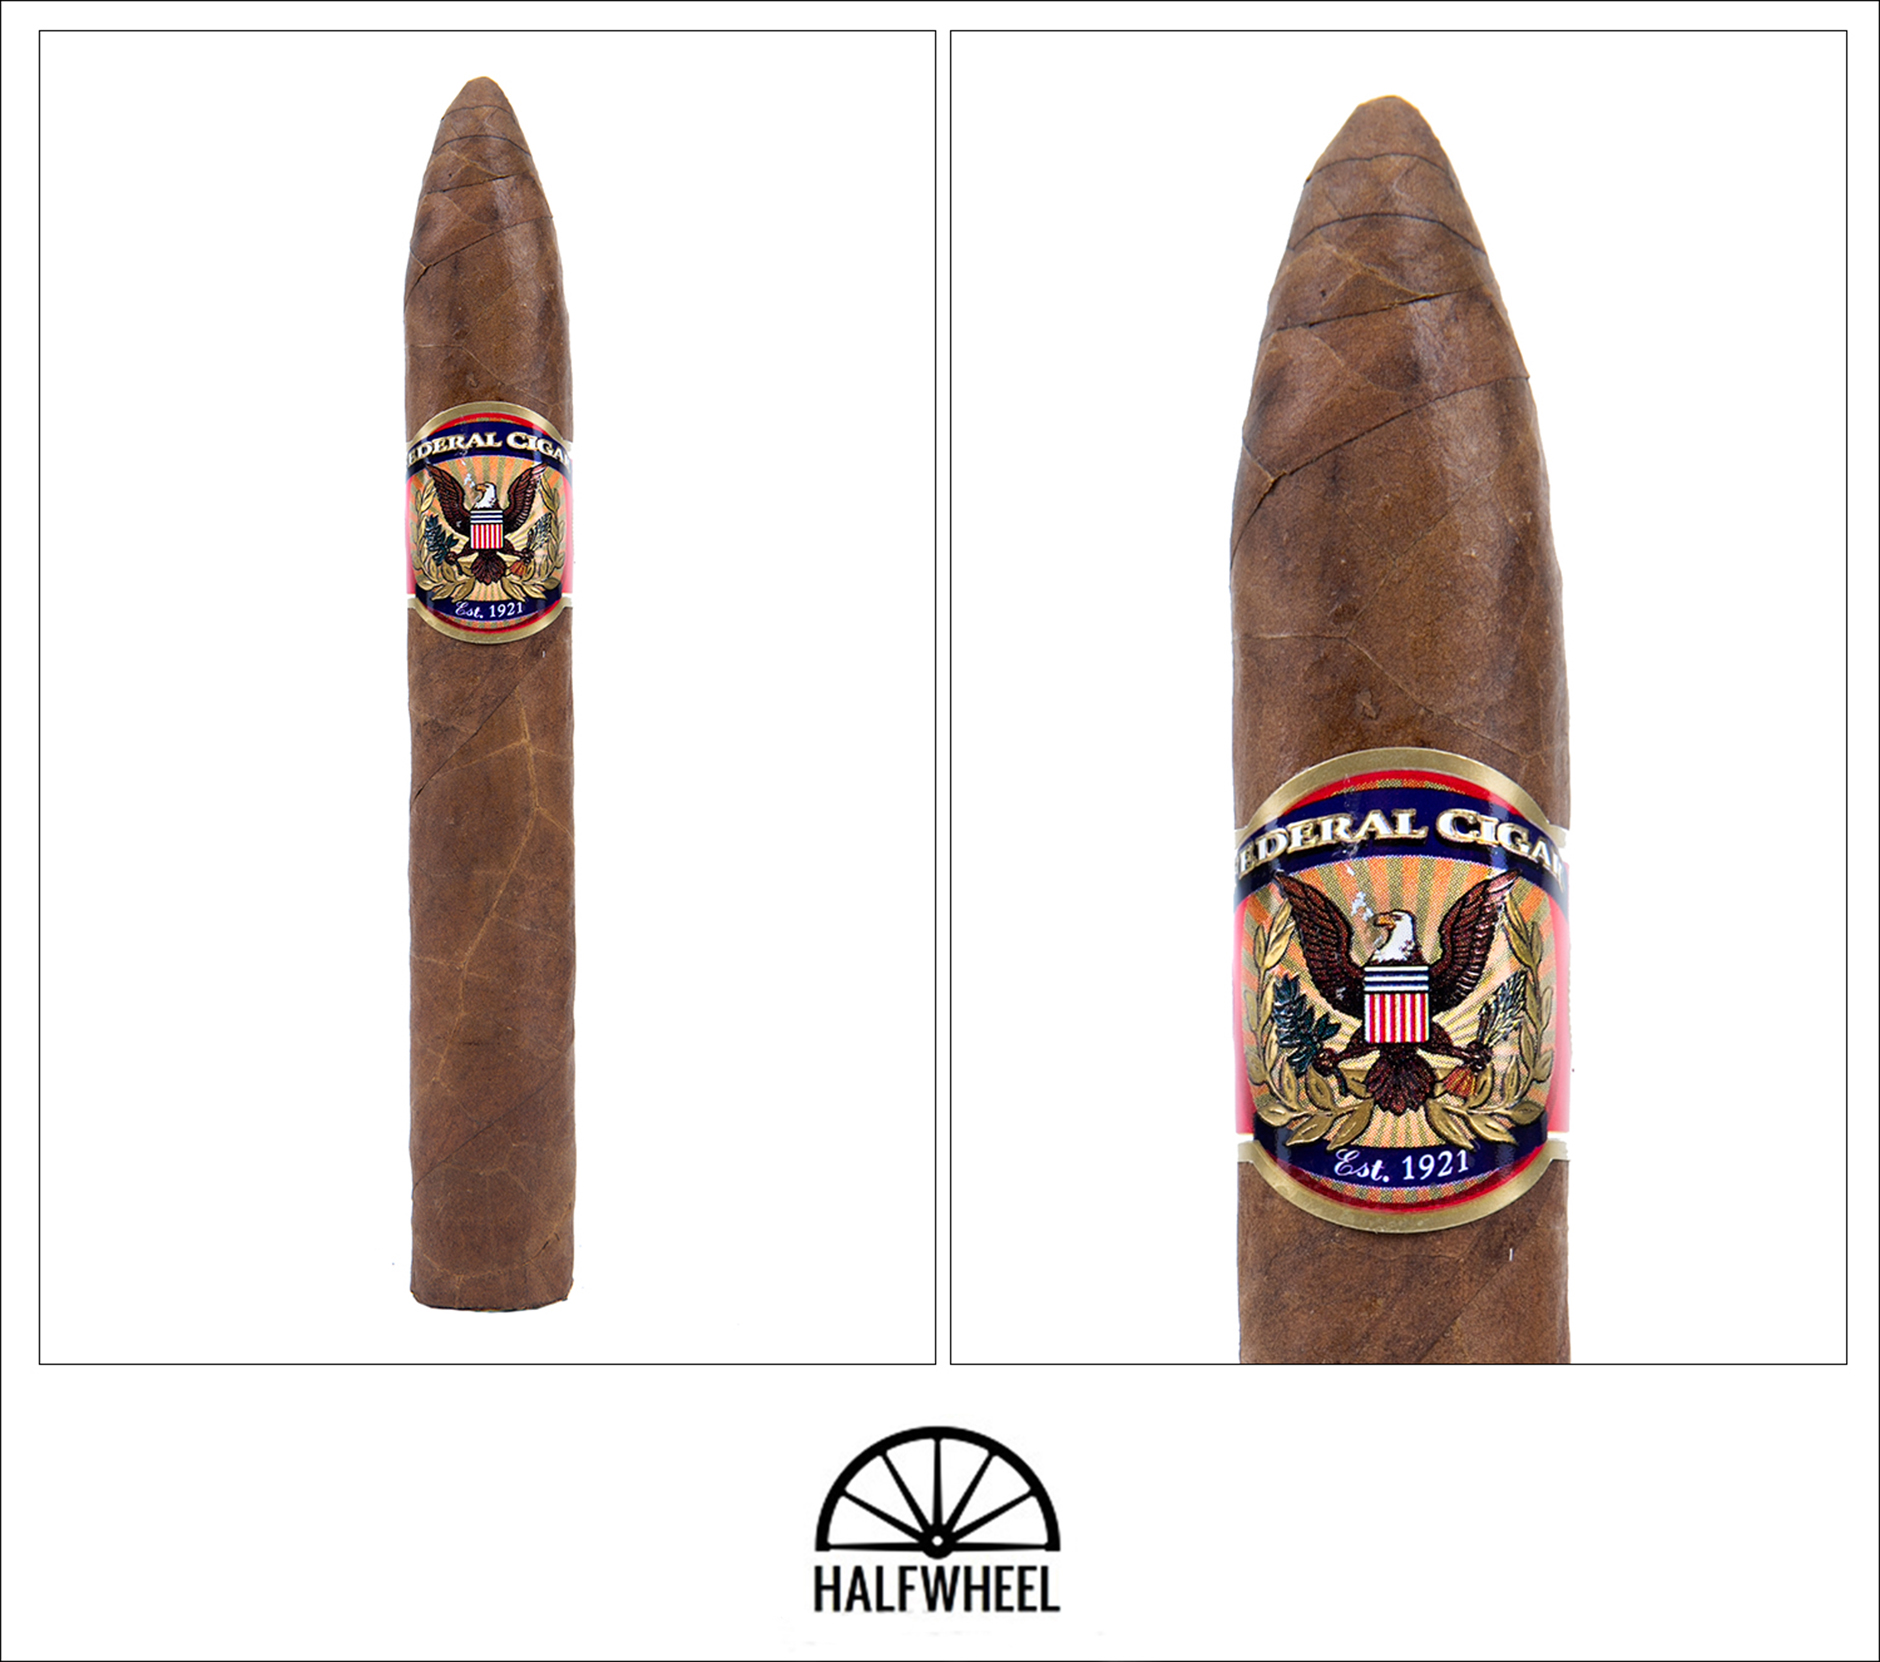 Oliva Federal Cigar 93rd Anniversary Reserve No 2 1